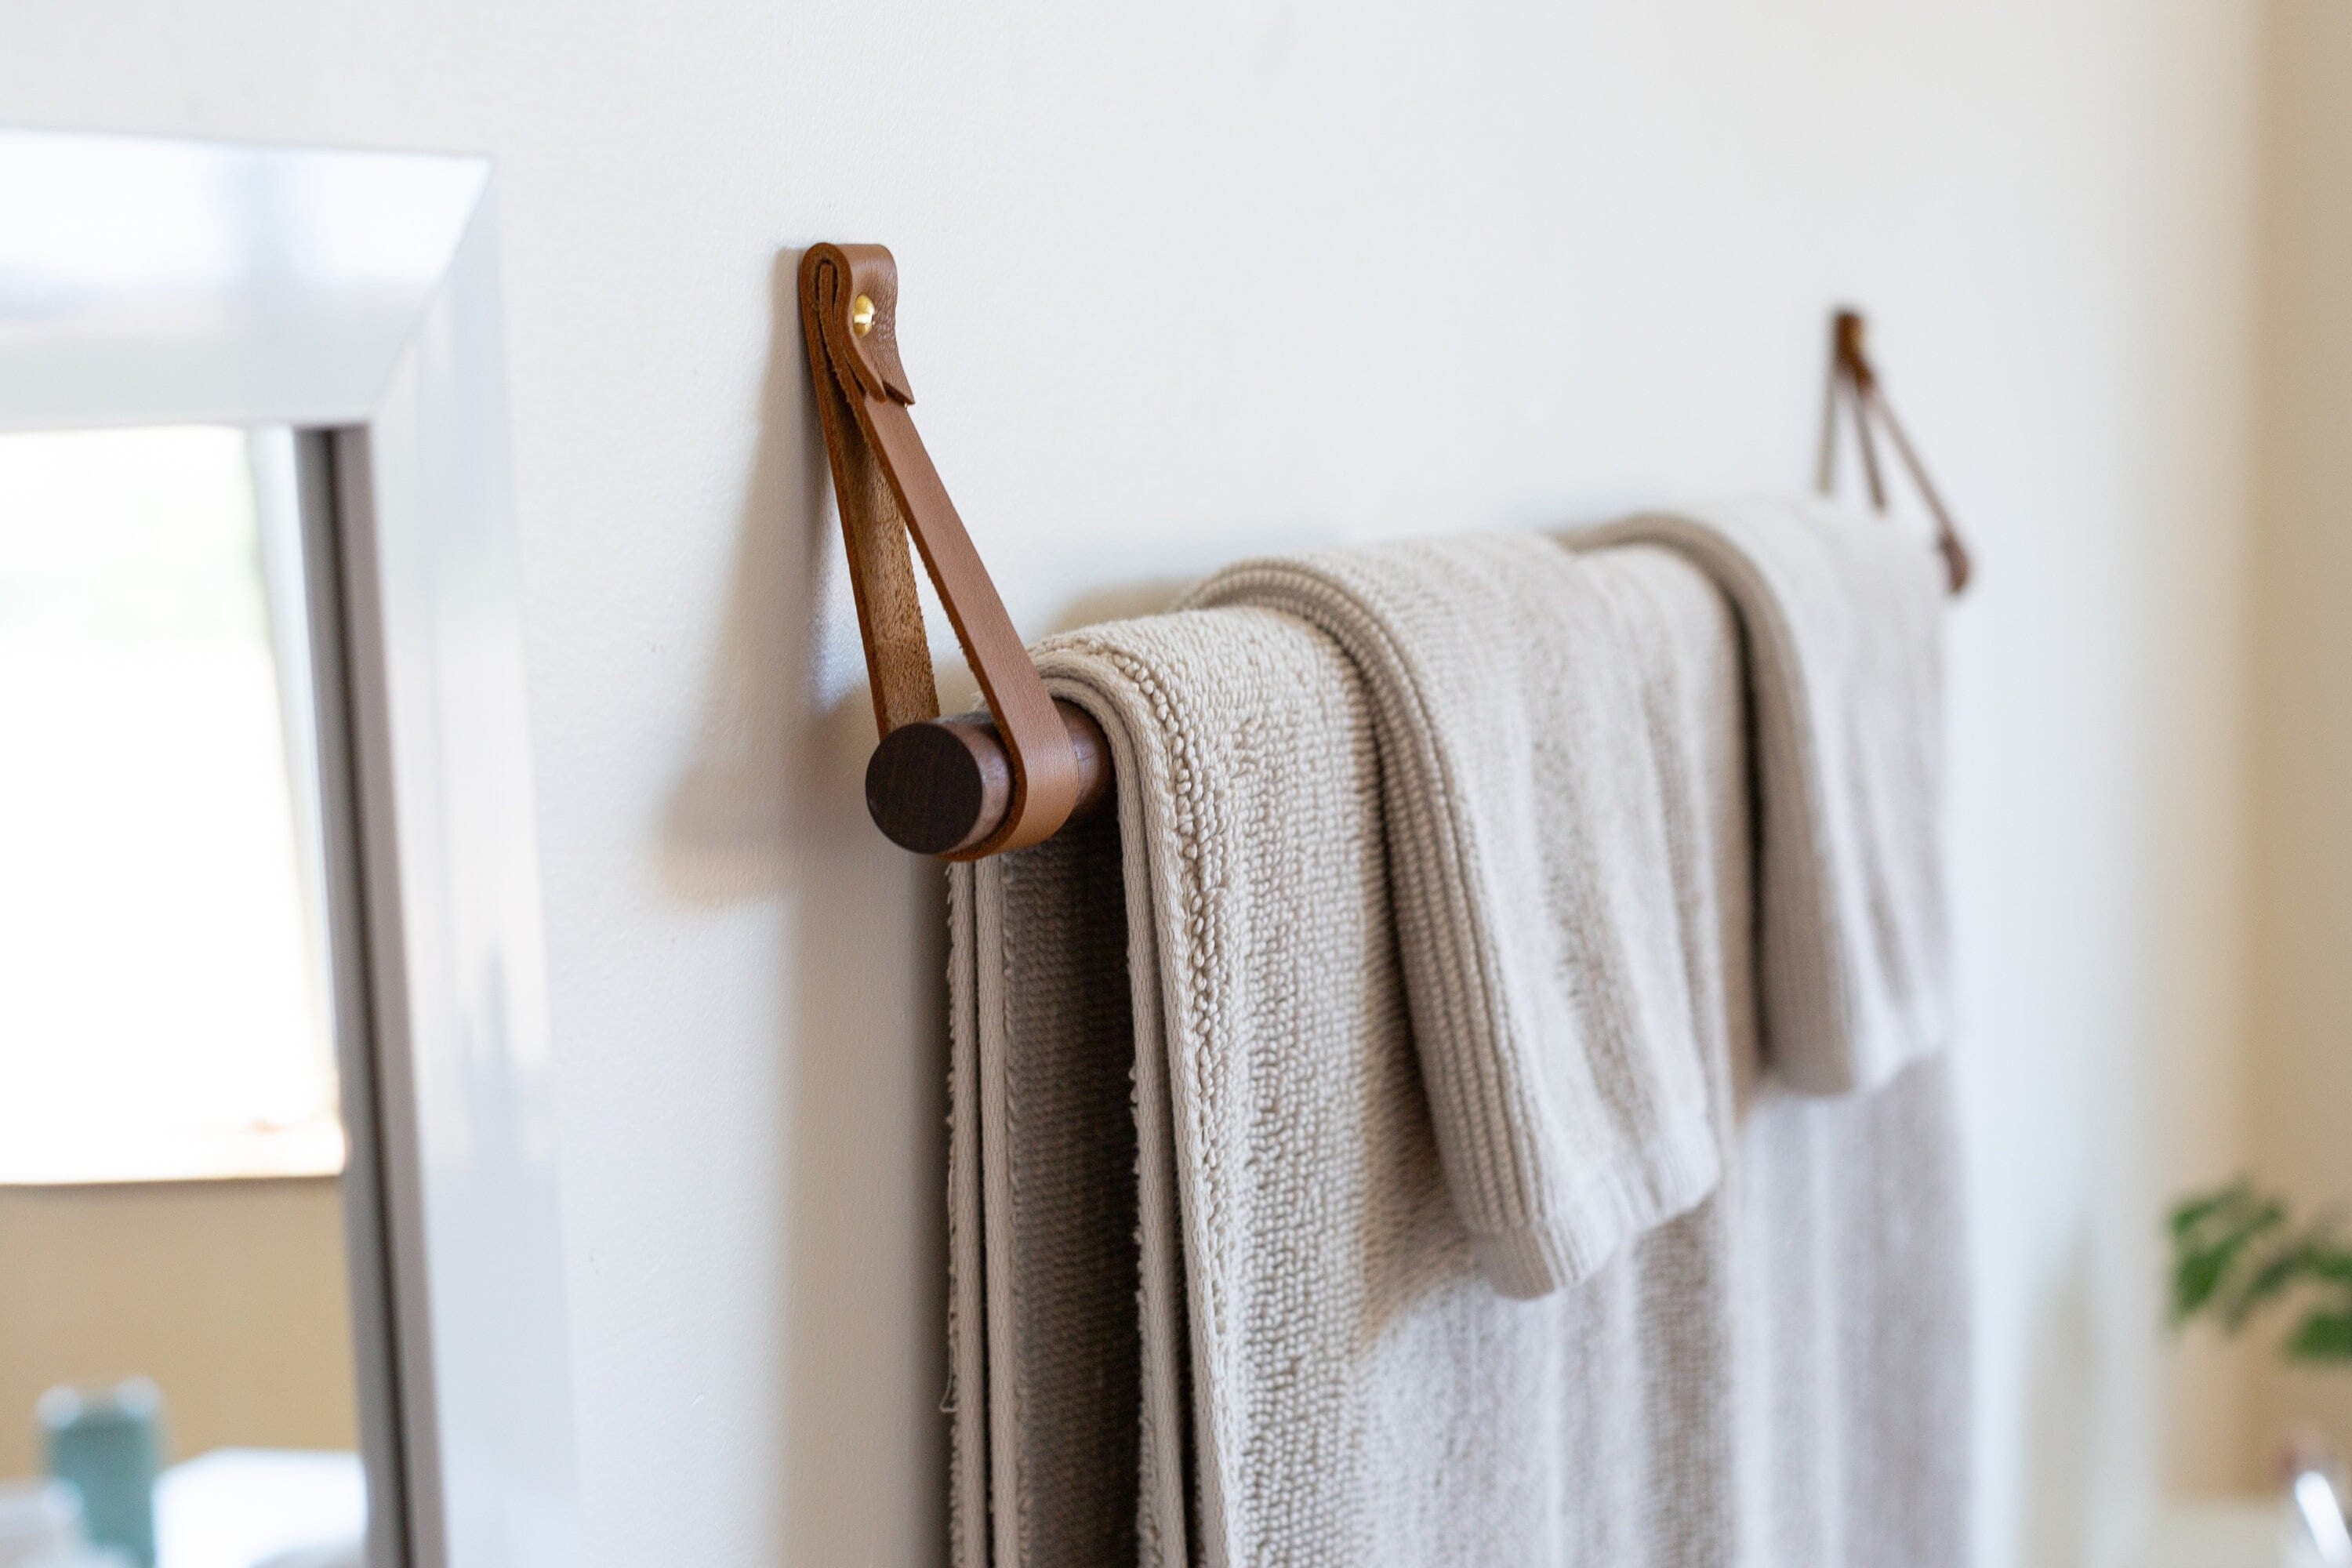 Leather Towel Holder for Kitchen or Bathroom  Tea towels diy, Towel holder  diy, Kitchen towel holder